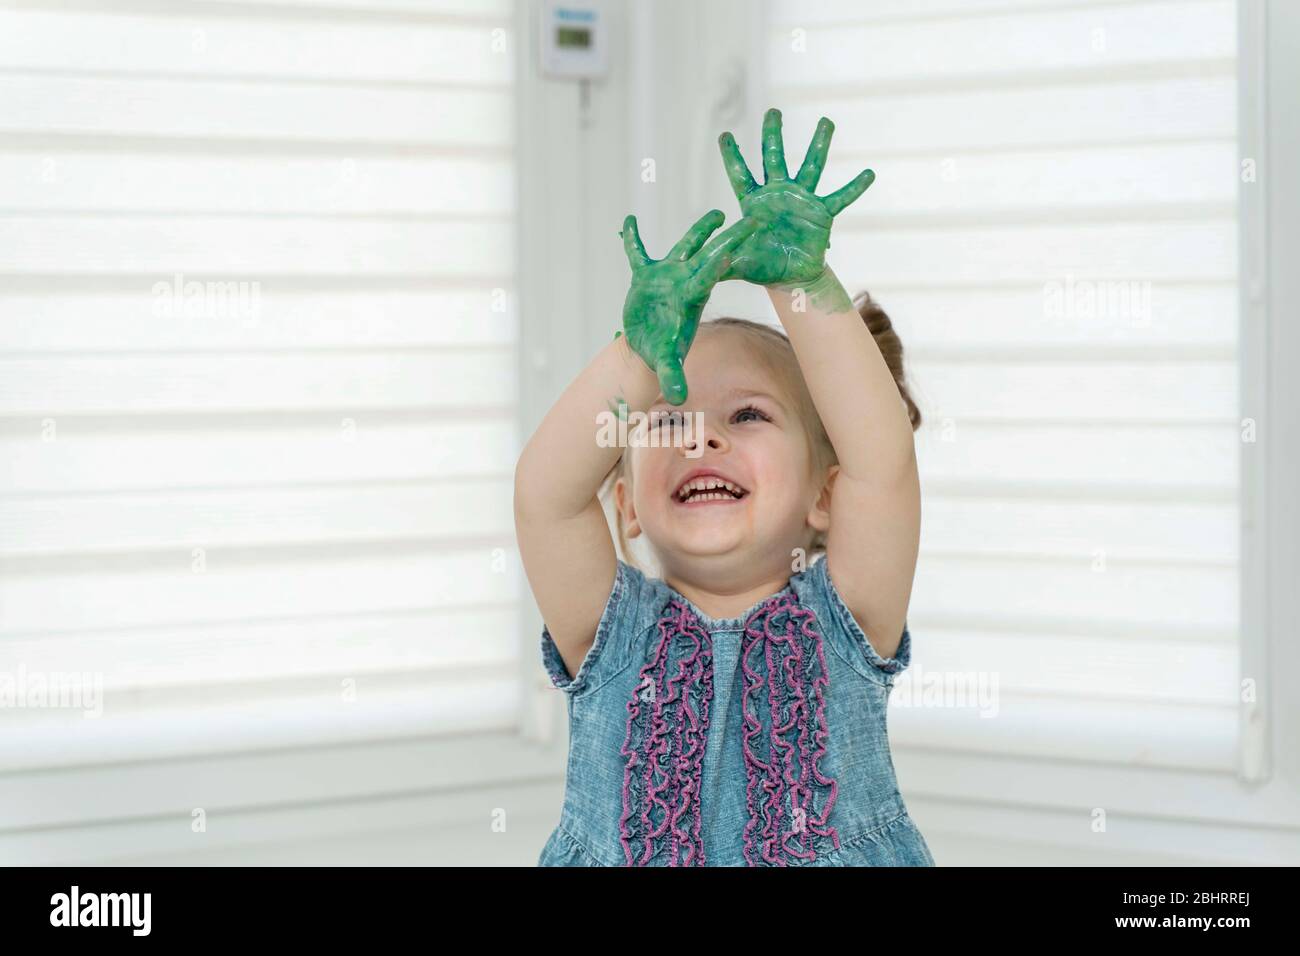 Little girl paints with fingers.girl joyfully raised her hands in raska up, self-isolation, coronavirus covid-19, stay home Stock Photo